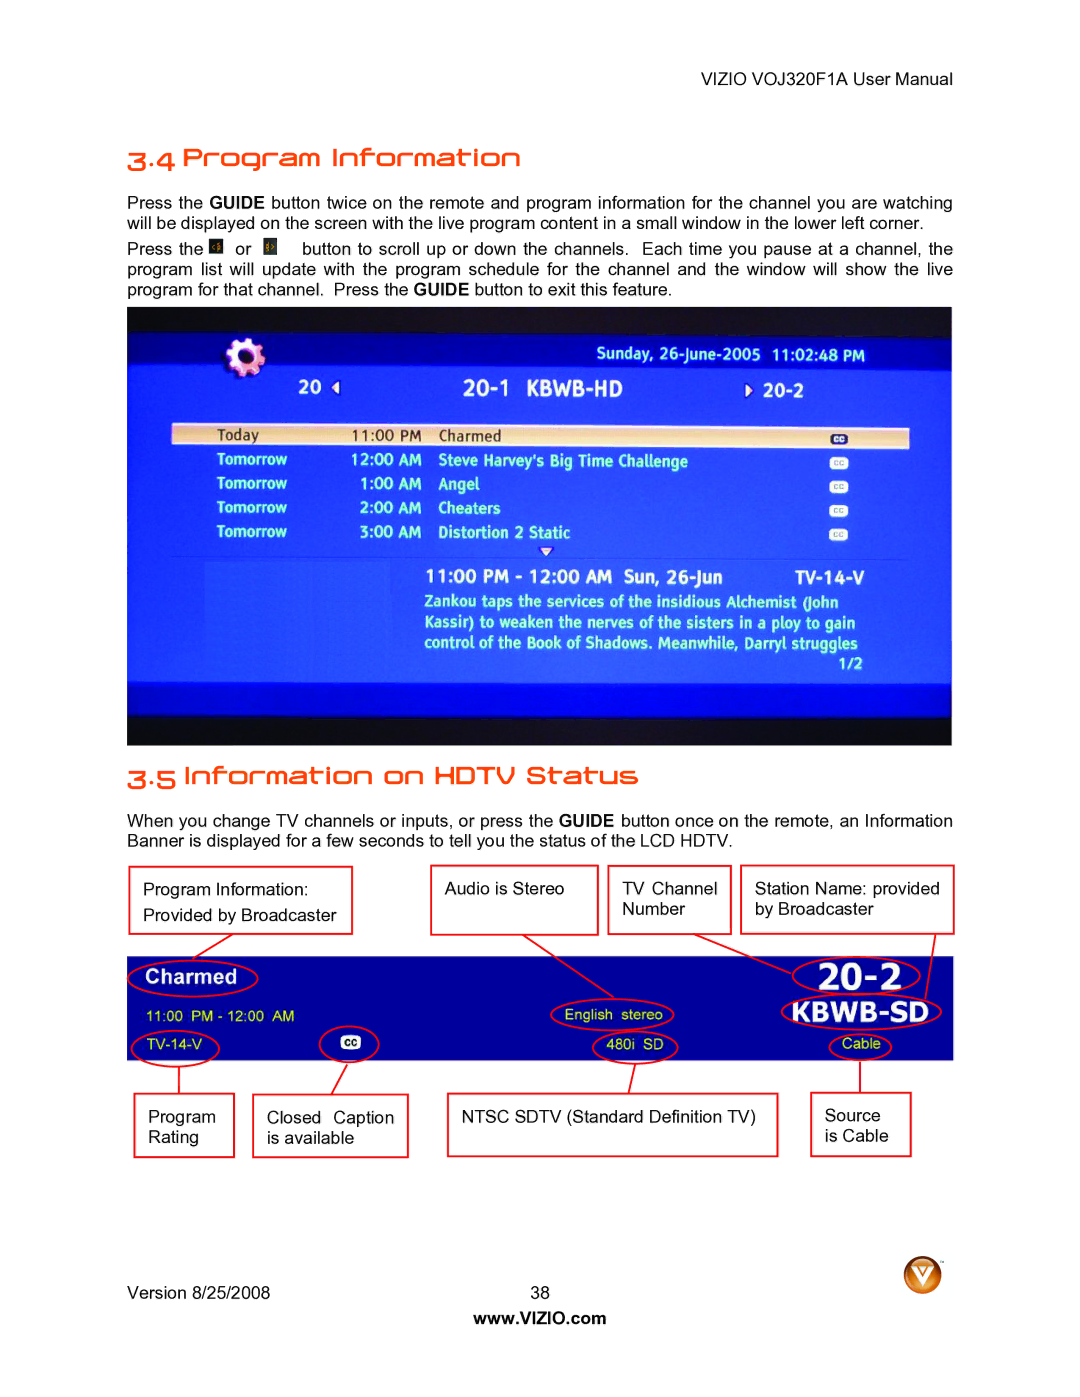 Vizio VOJ320F1A user manual Program Information, Information on Hdtv Status 